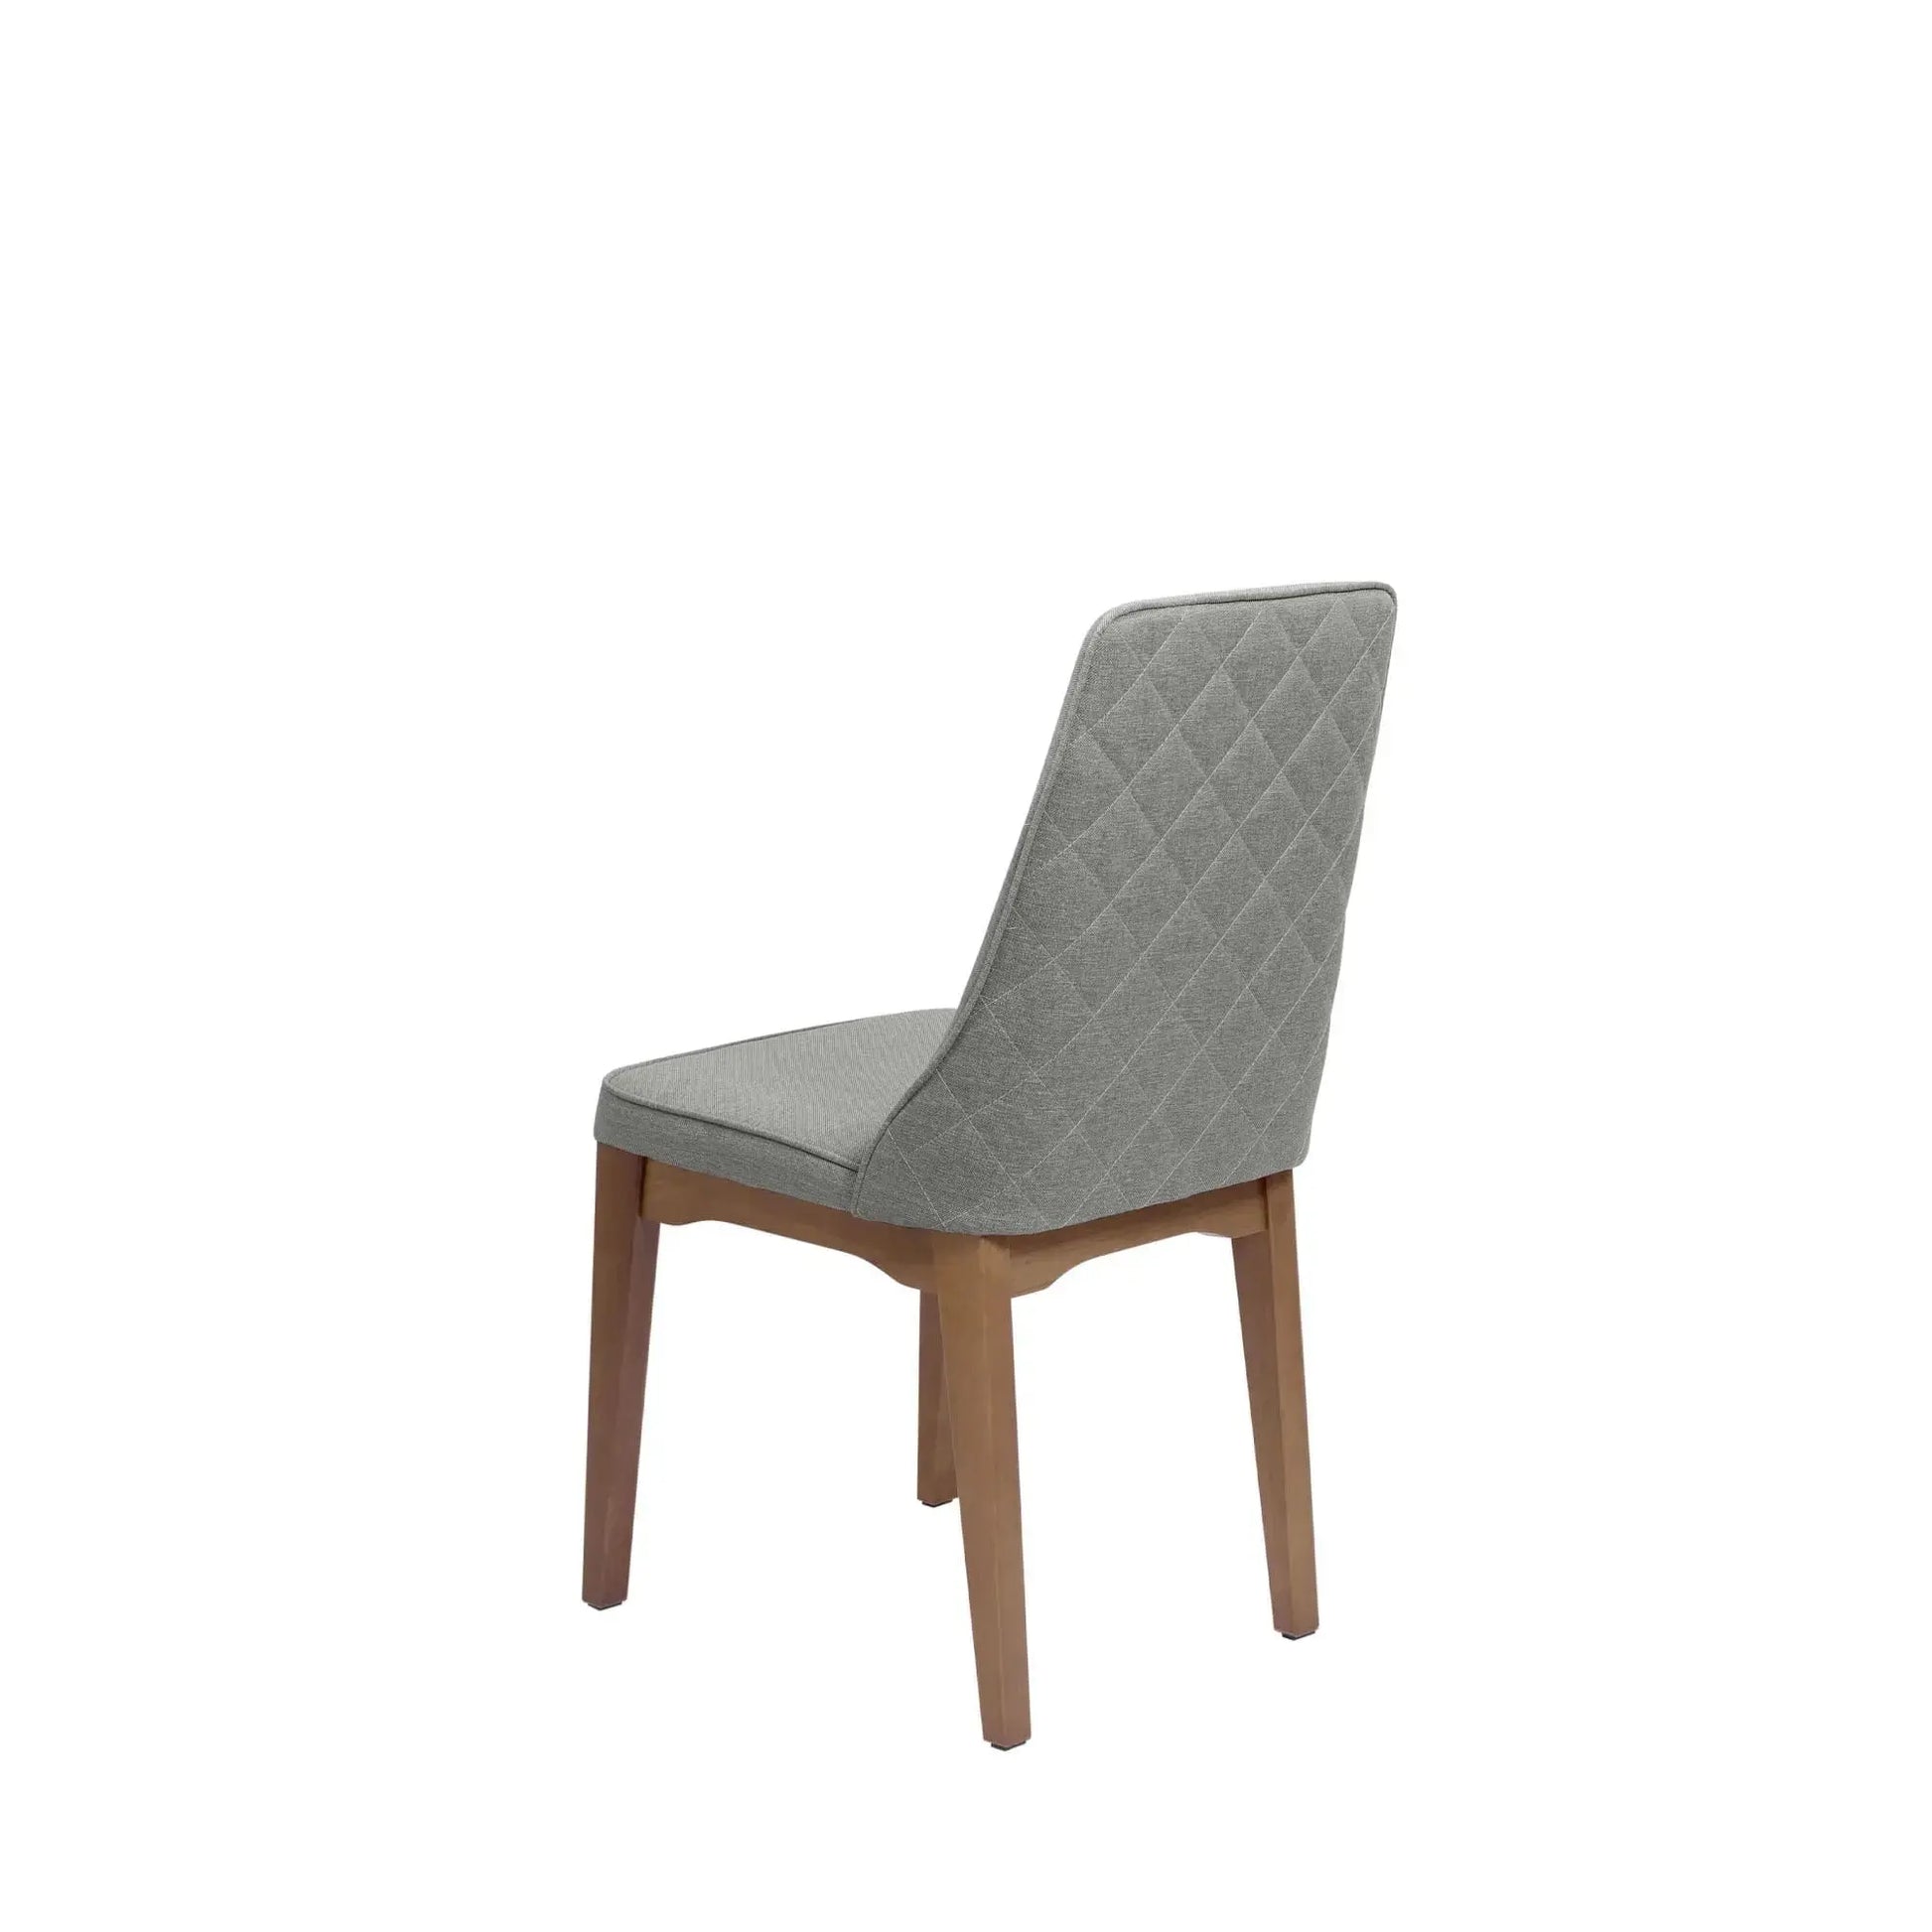 Homedock Conjunto de Jantar Mesa com Vidro Bennett 6 Cadeiras Elsie Matelassê - Natural c/ Carbono Móveis Província